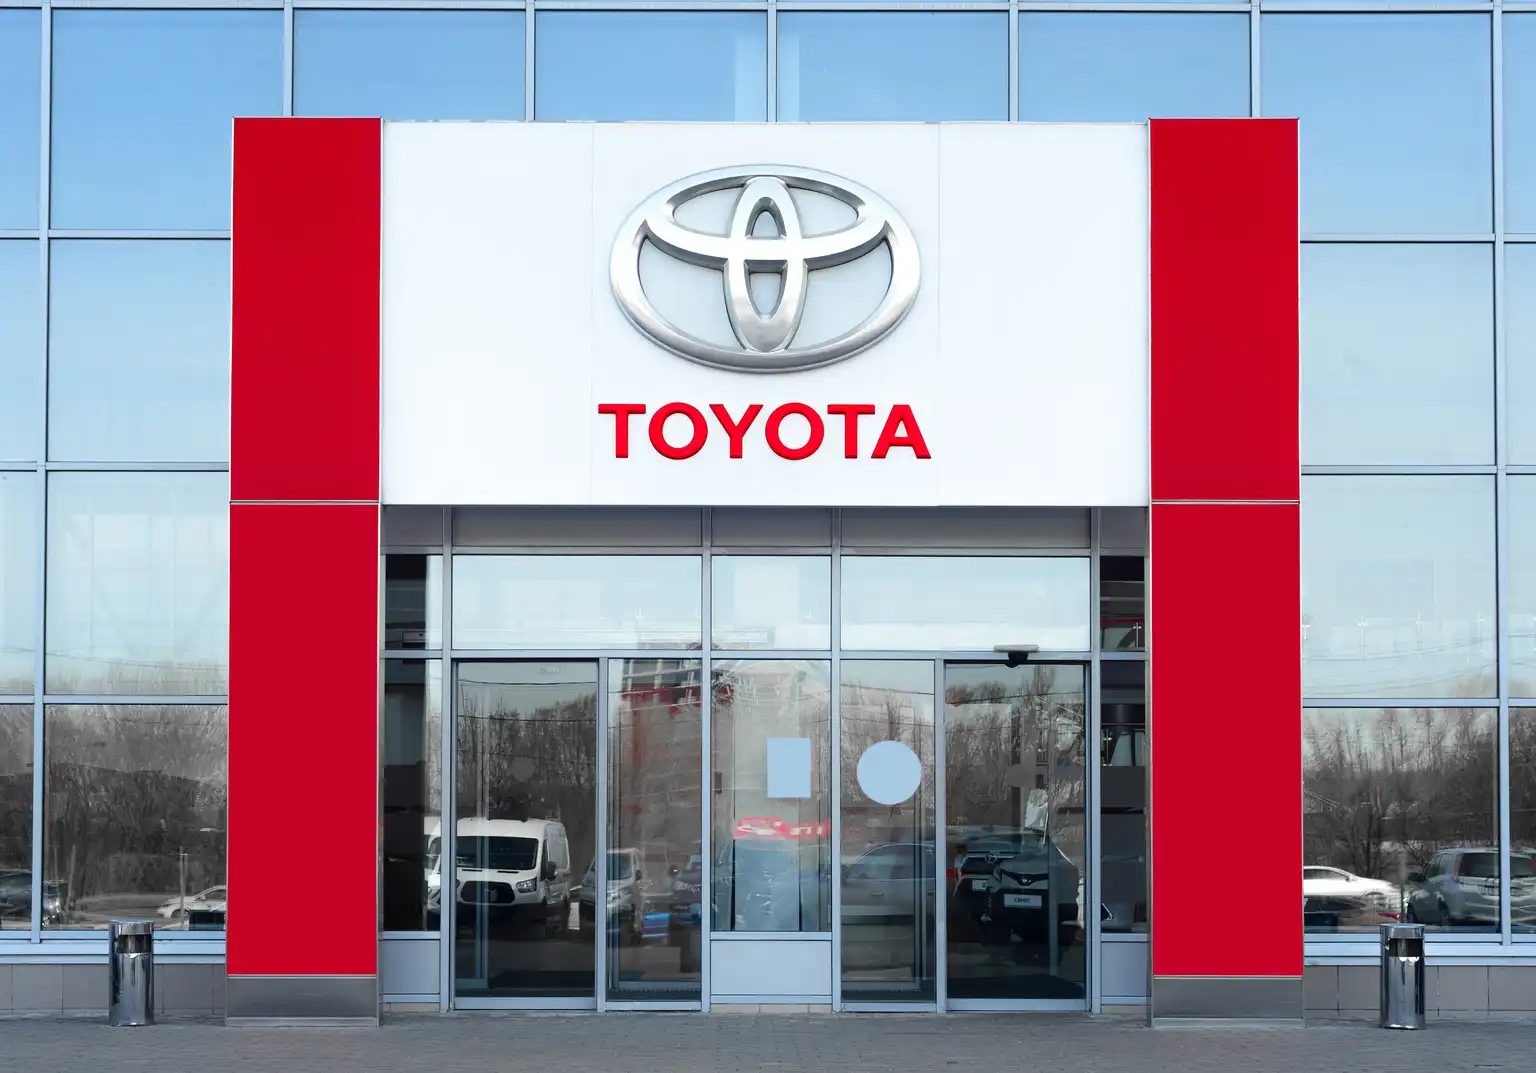 Toyota: Auto Giant's Calculated Shift Towards EVs - Seeking Alpha